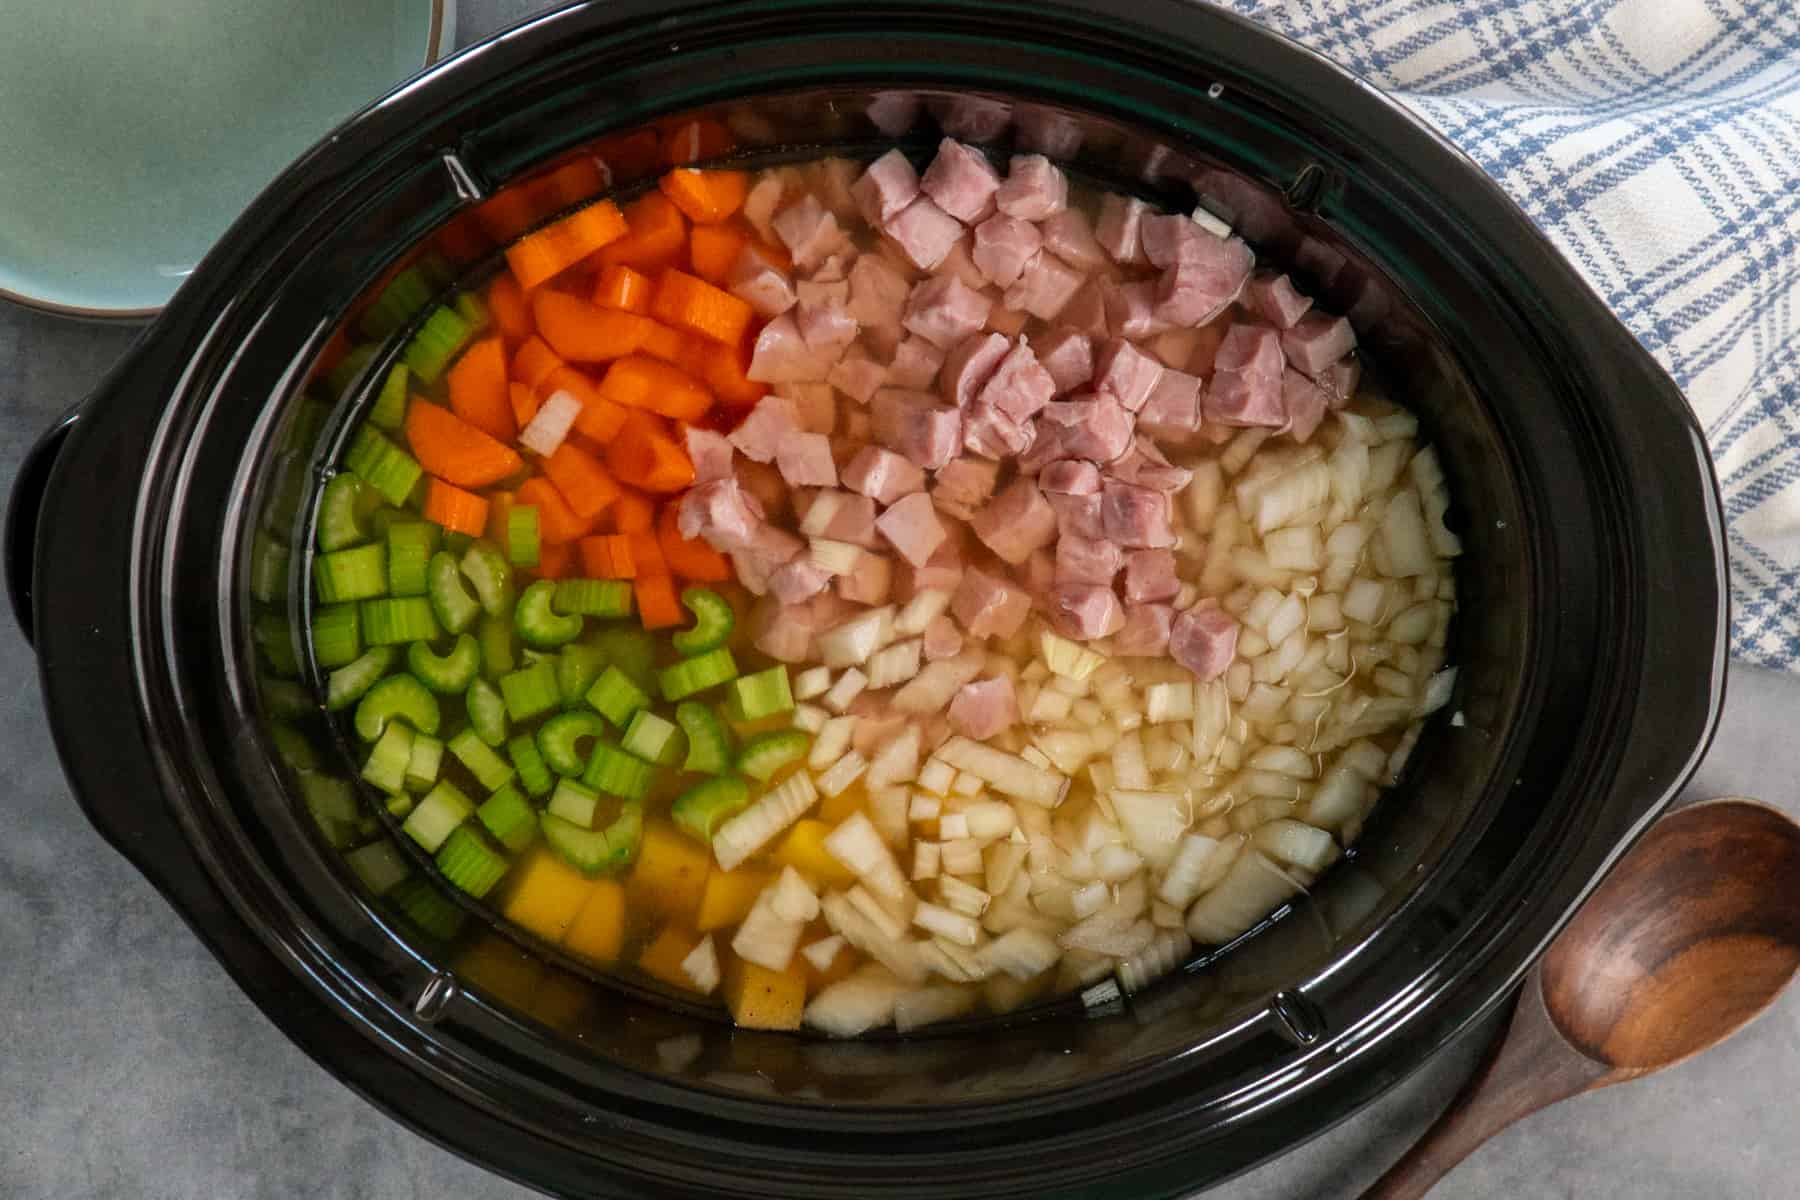 Ham, potatoes and veggies in a crock pot.